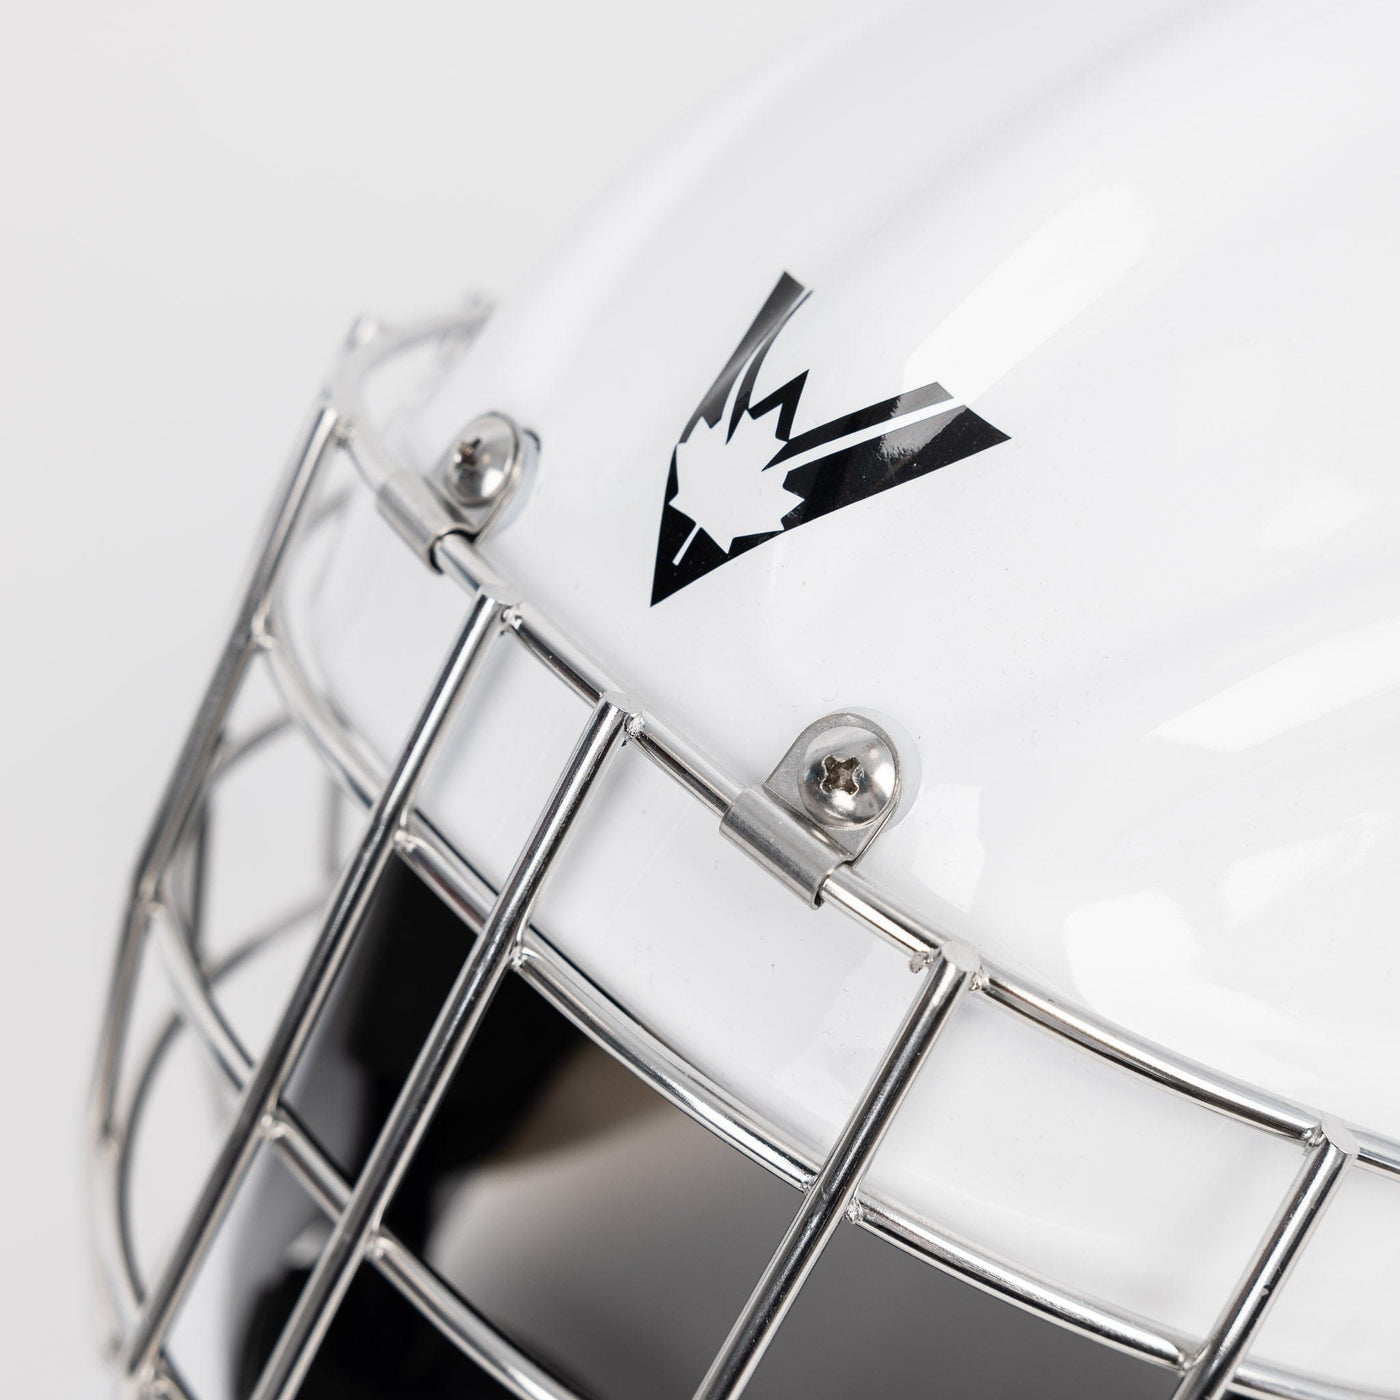 Victory V2 Junior Goalie Mask - The Hockey Shop Source For Sports